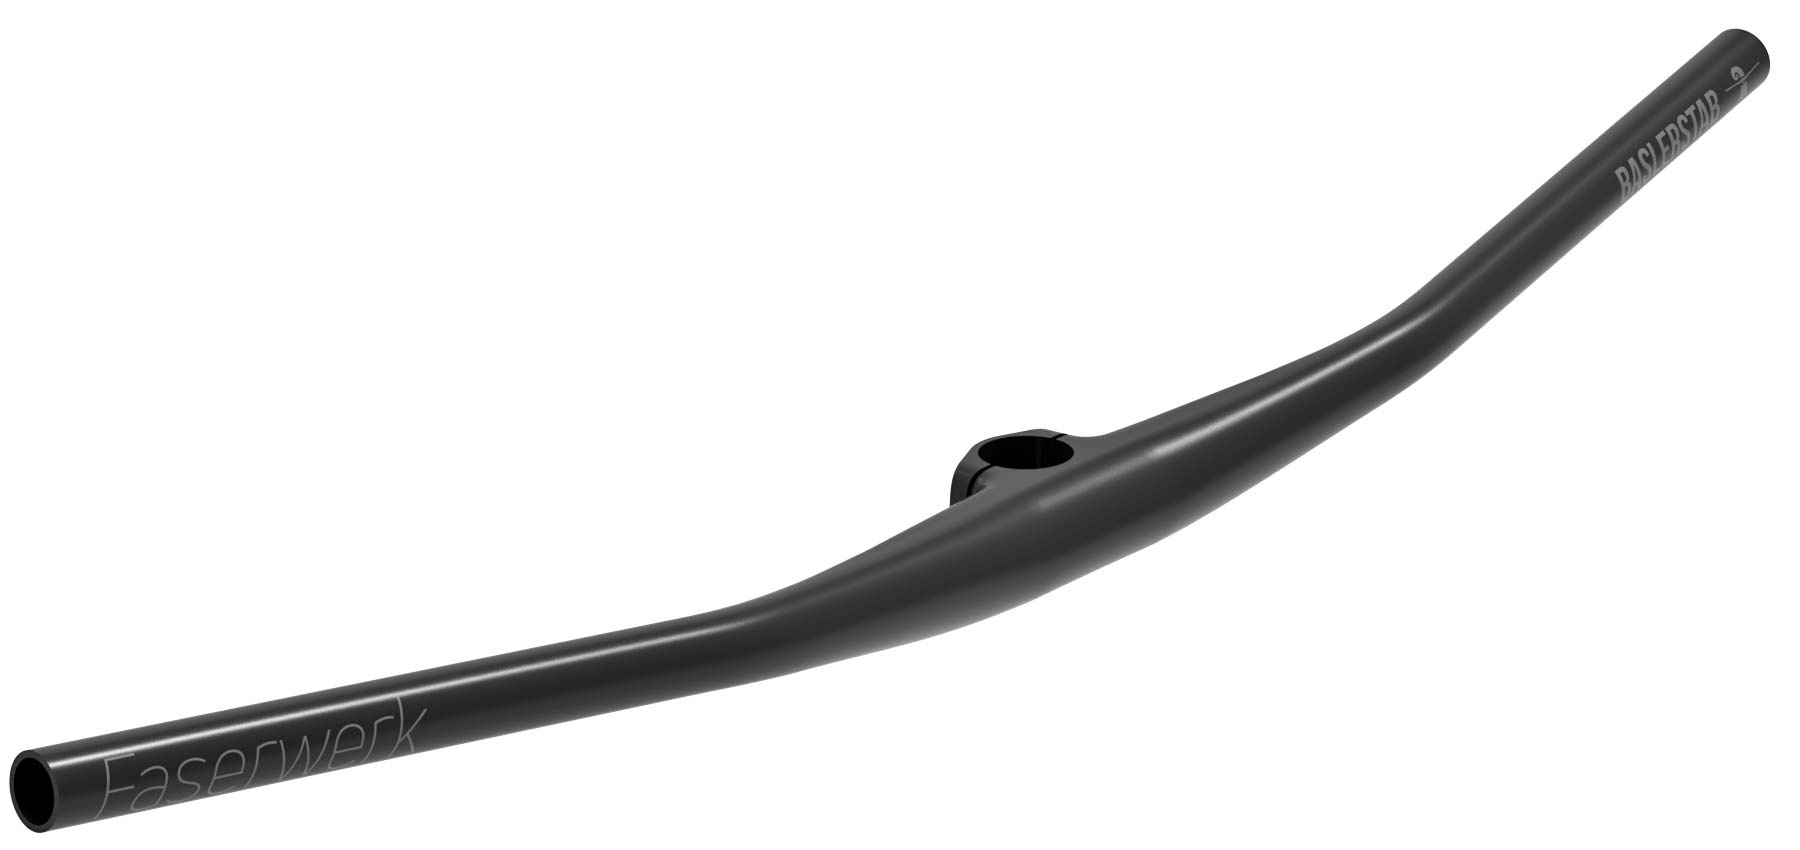 Faserwerk Baslerstab direct-mount lightweight carbon MTB handlebar, angled